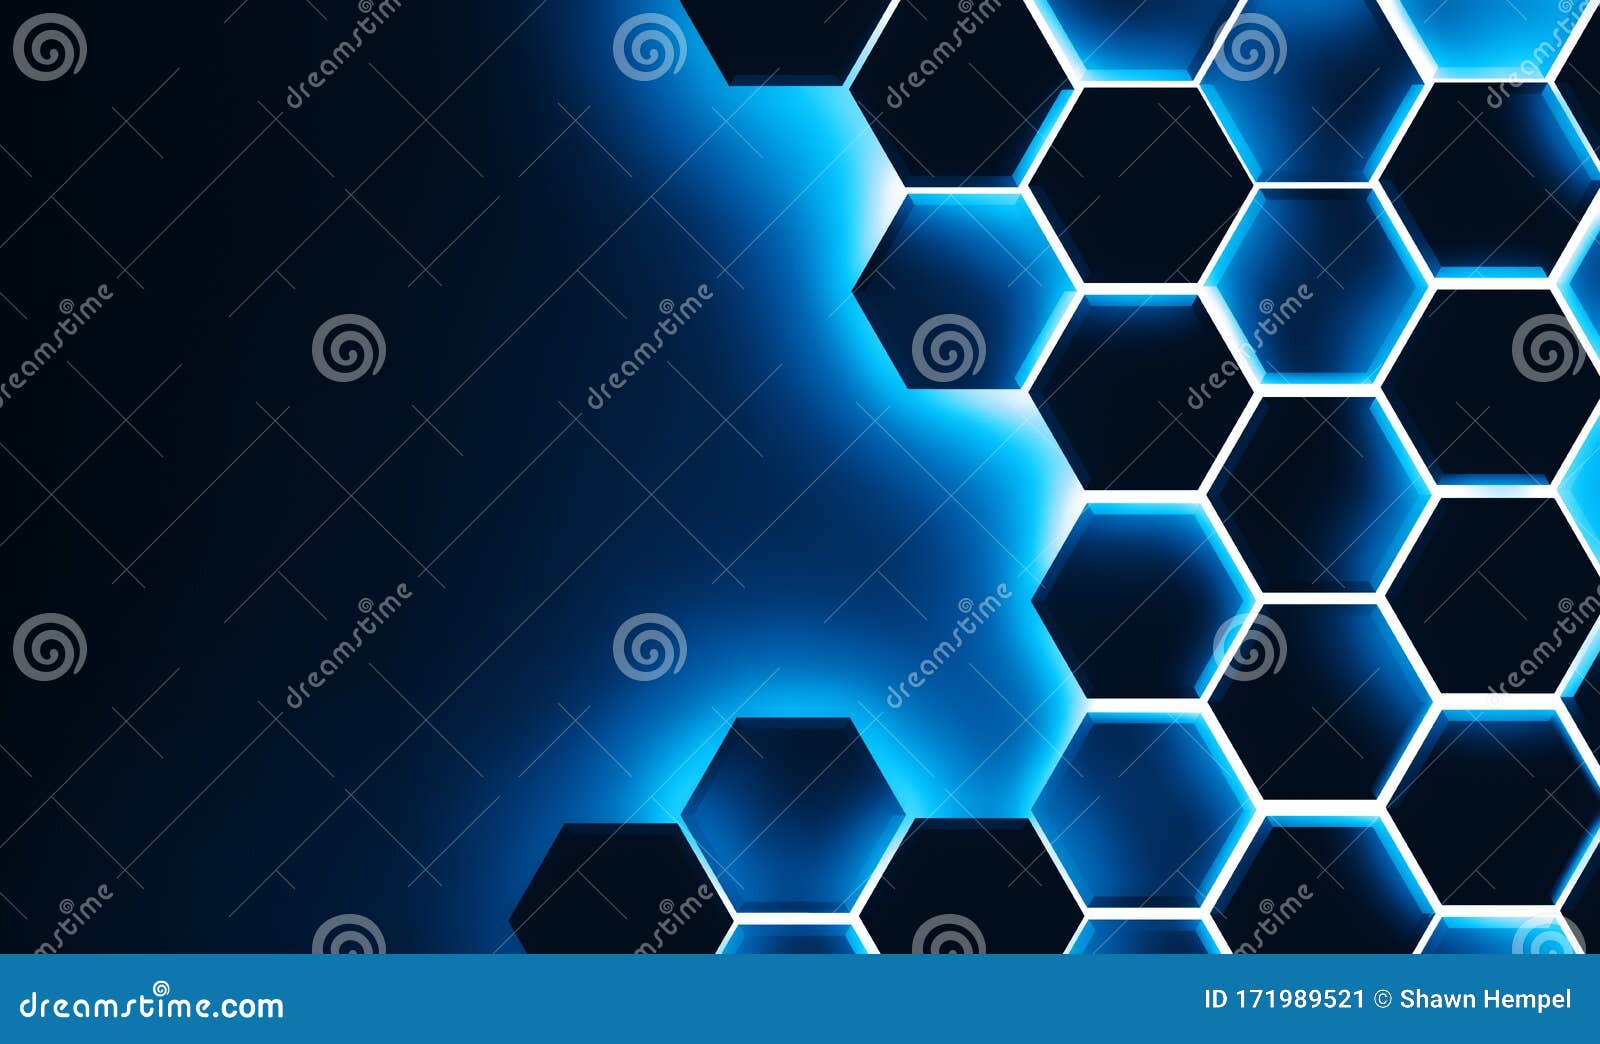 DWELLSINDIA Honeycomb Pattern Self Adhesive Peel and Stick PVC Wallpaper  Waterproof Scratch Resistant Laminated 41x244 cm Dark Blue Matt   Amazonin Home Improvement